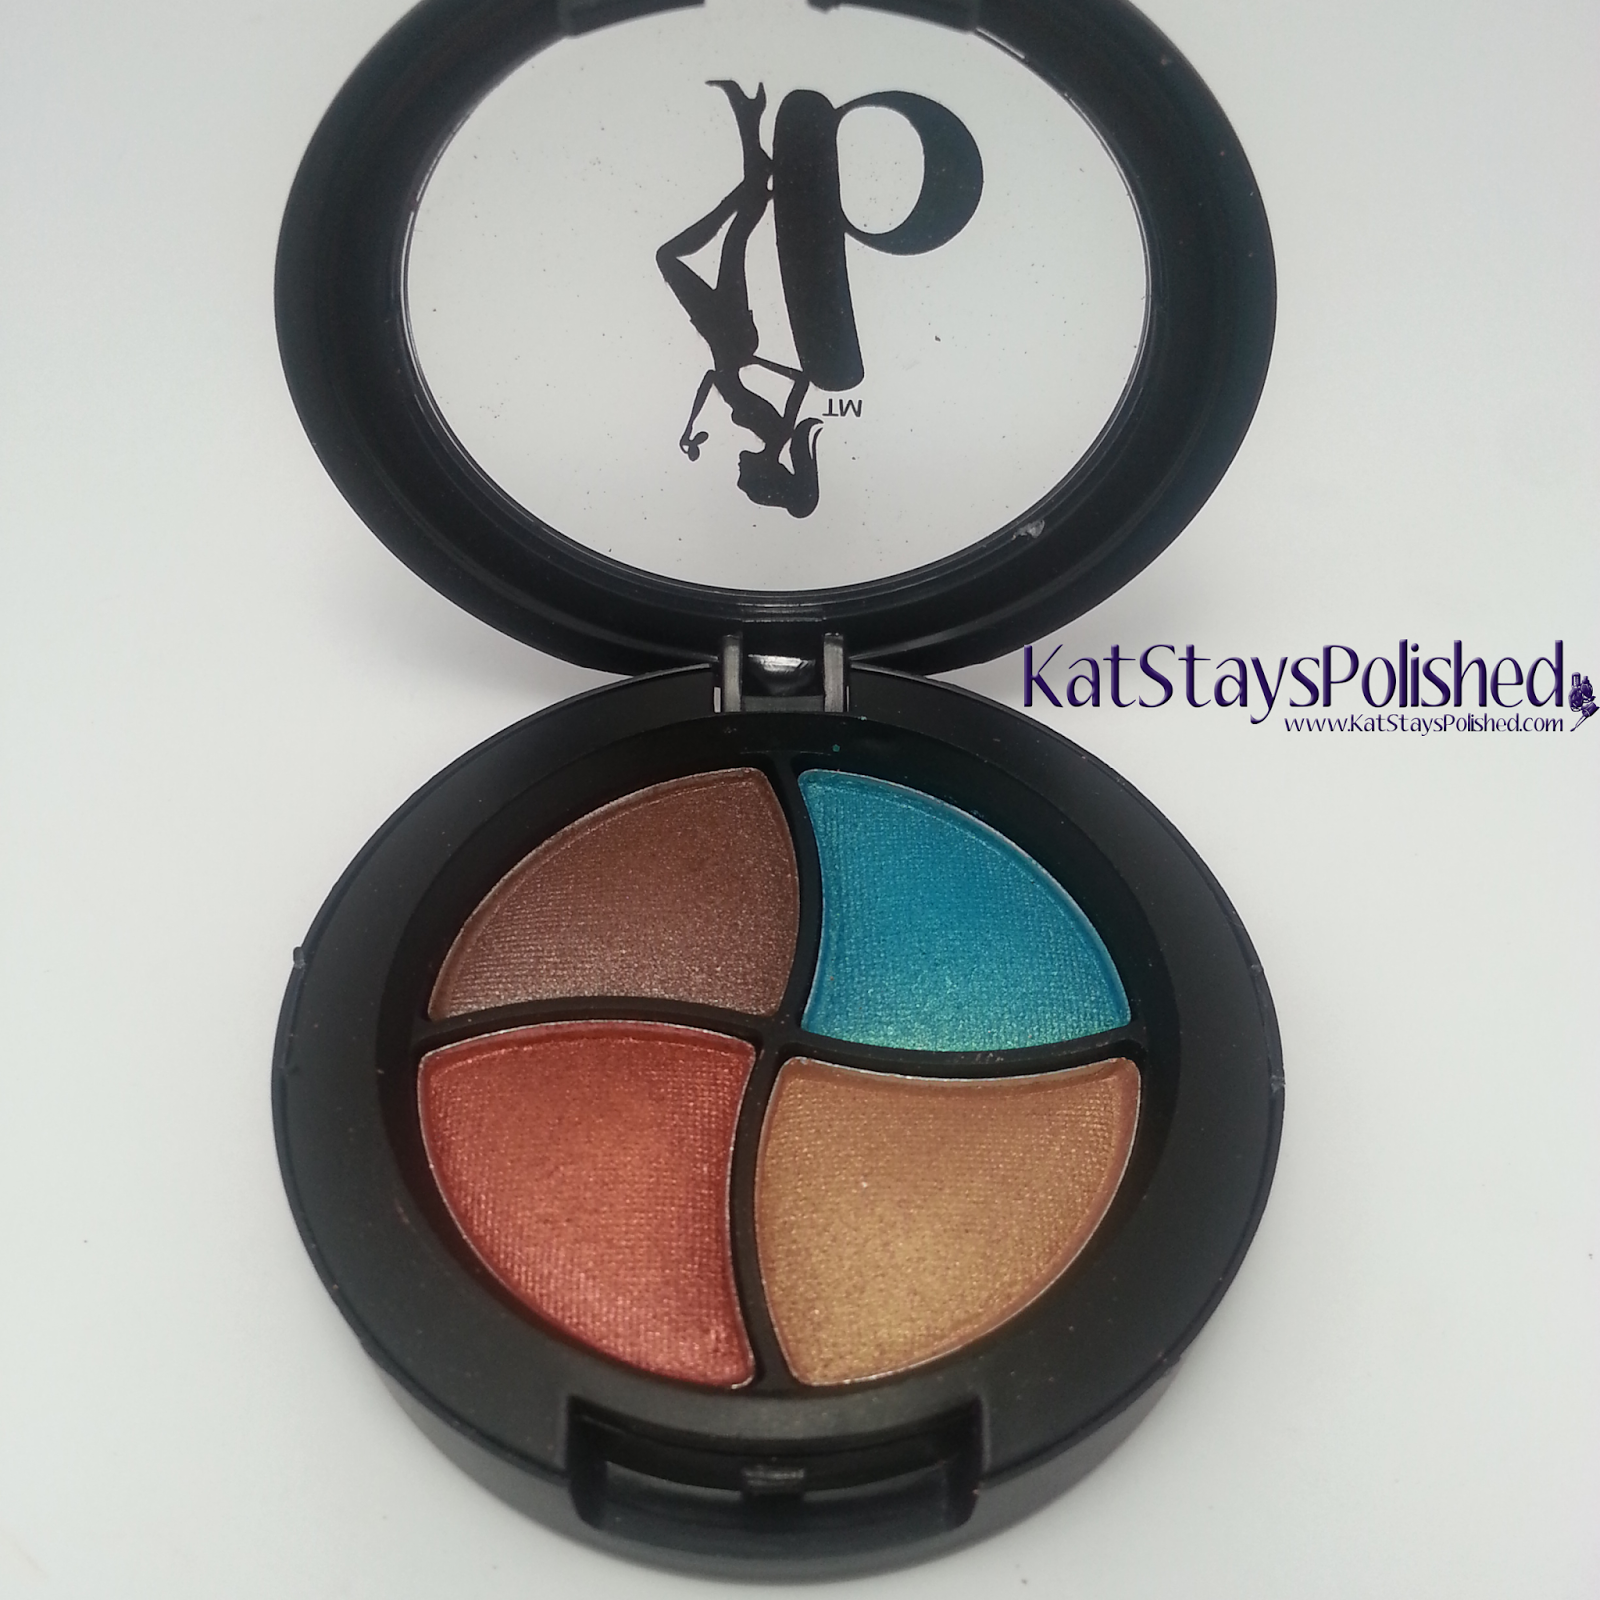 Ipsy Glam Bag: March 2014 - Be a Bombshell Eyeshadow Quad - Bora Bora | Kat Stays Polished